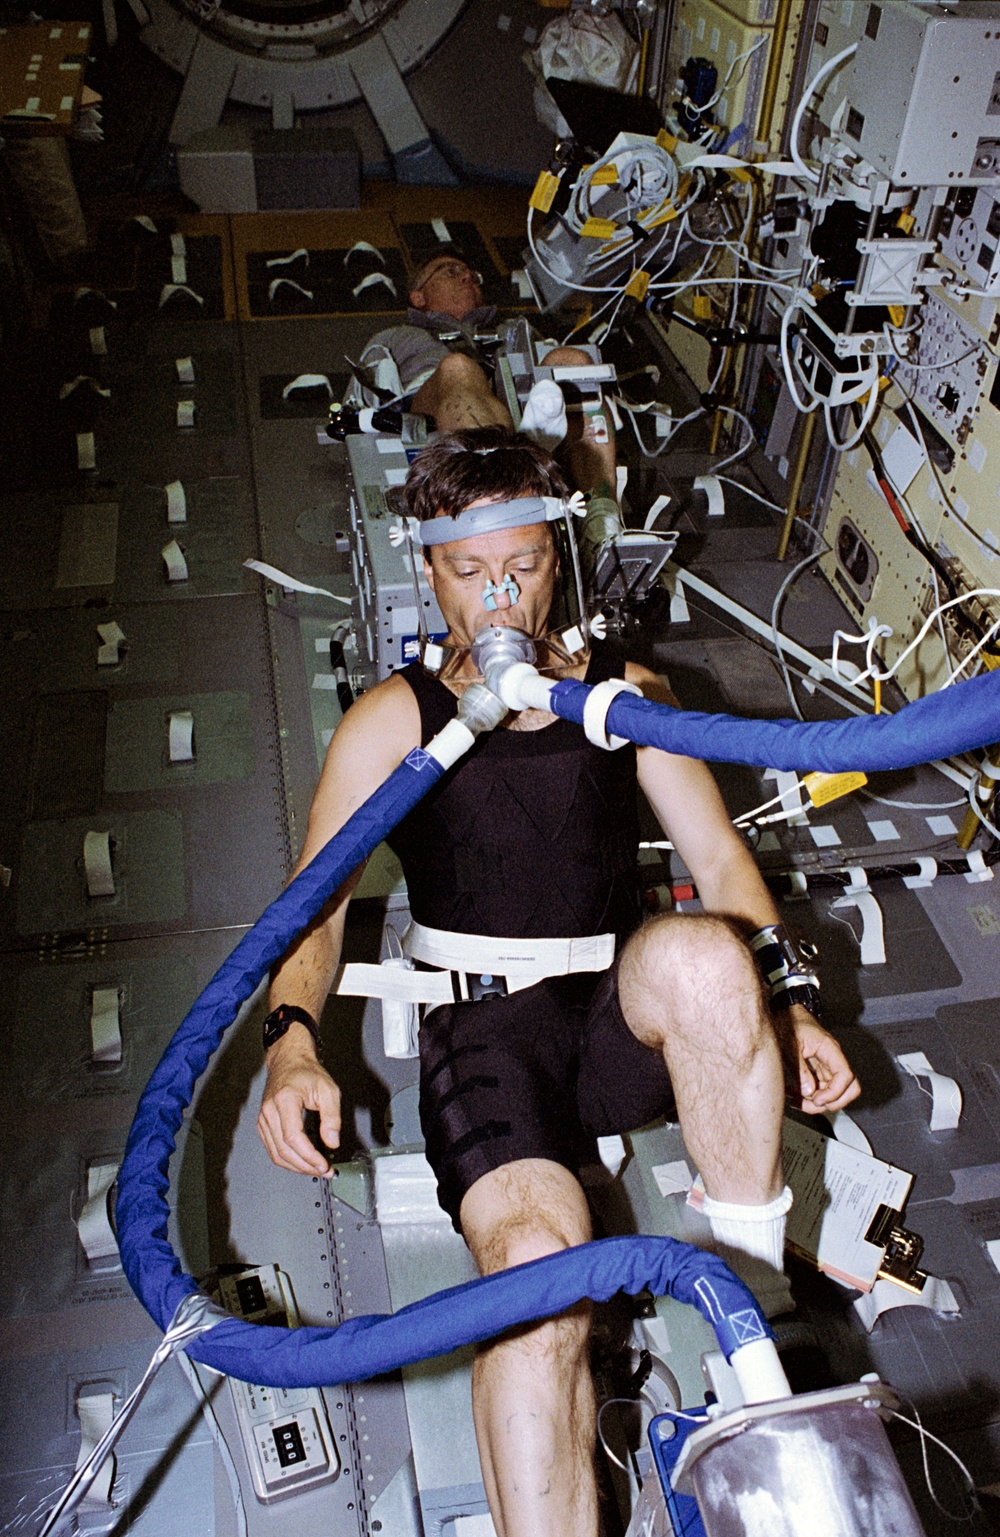 ALFE, Thirsk exercises on Spacelab ergometer as Helms monitors